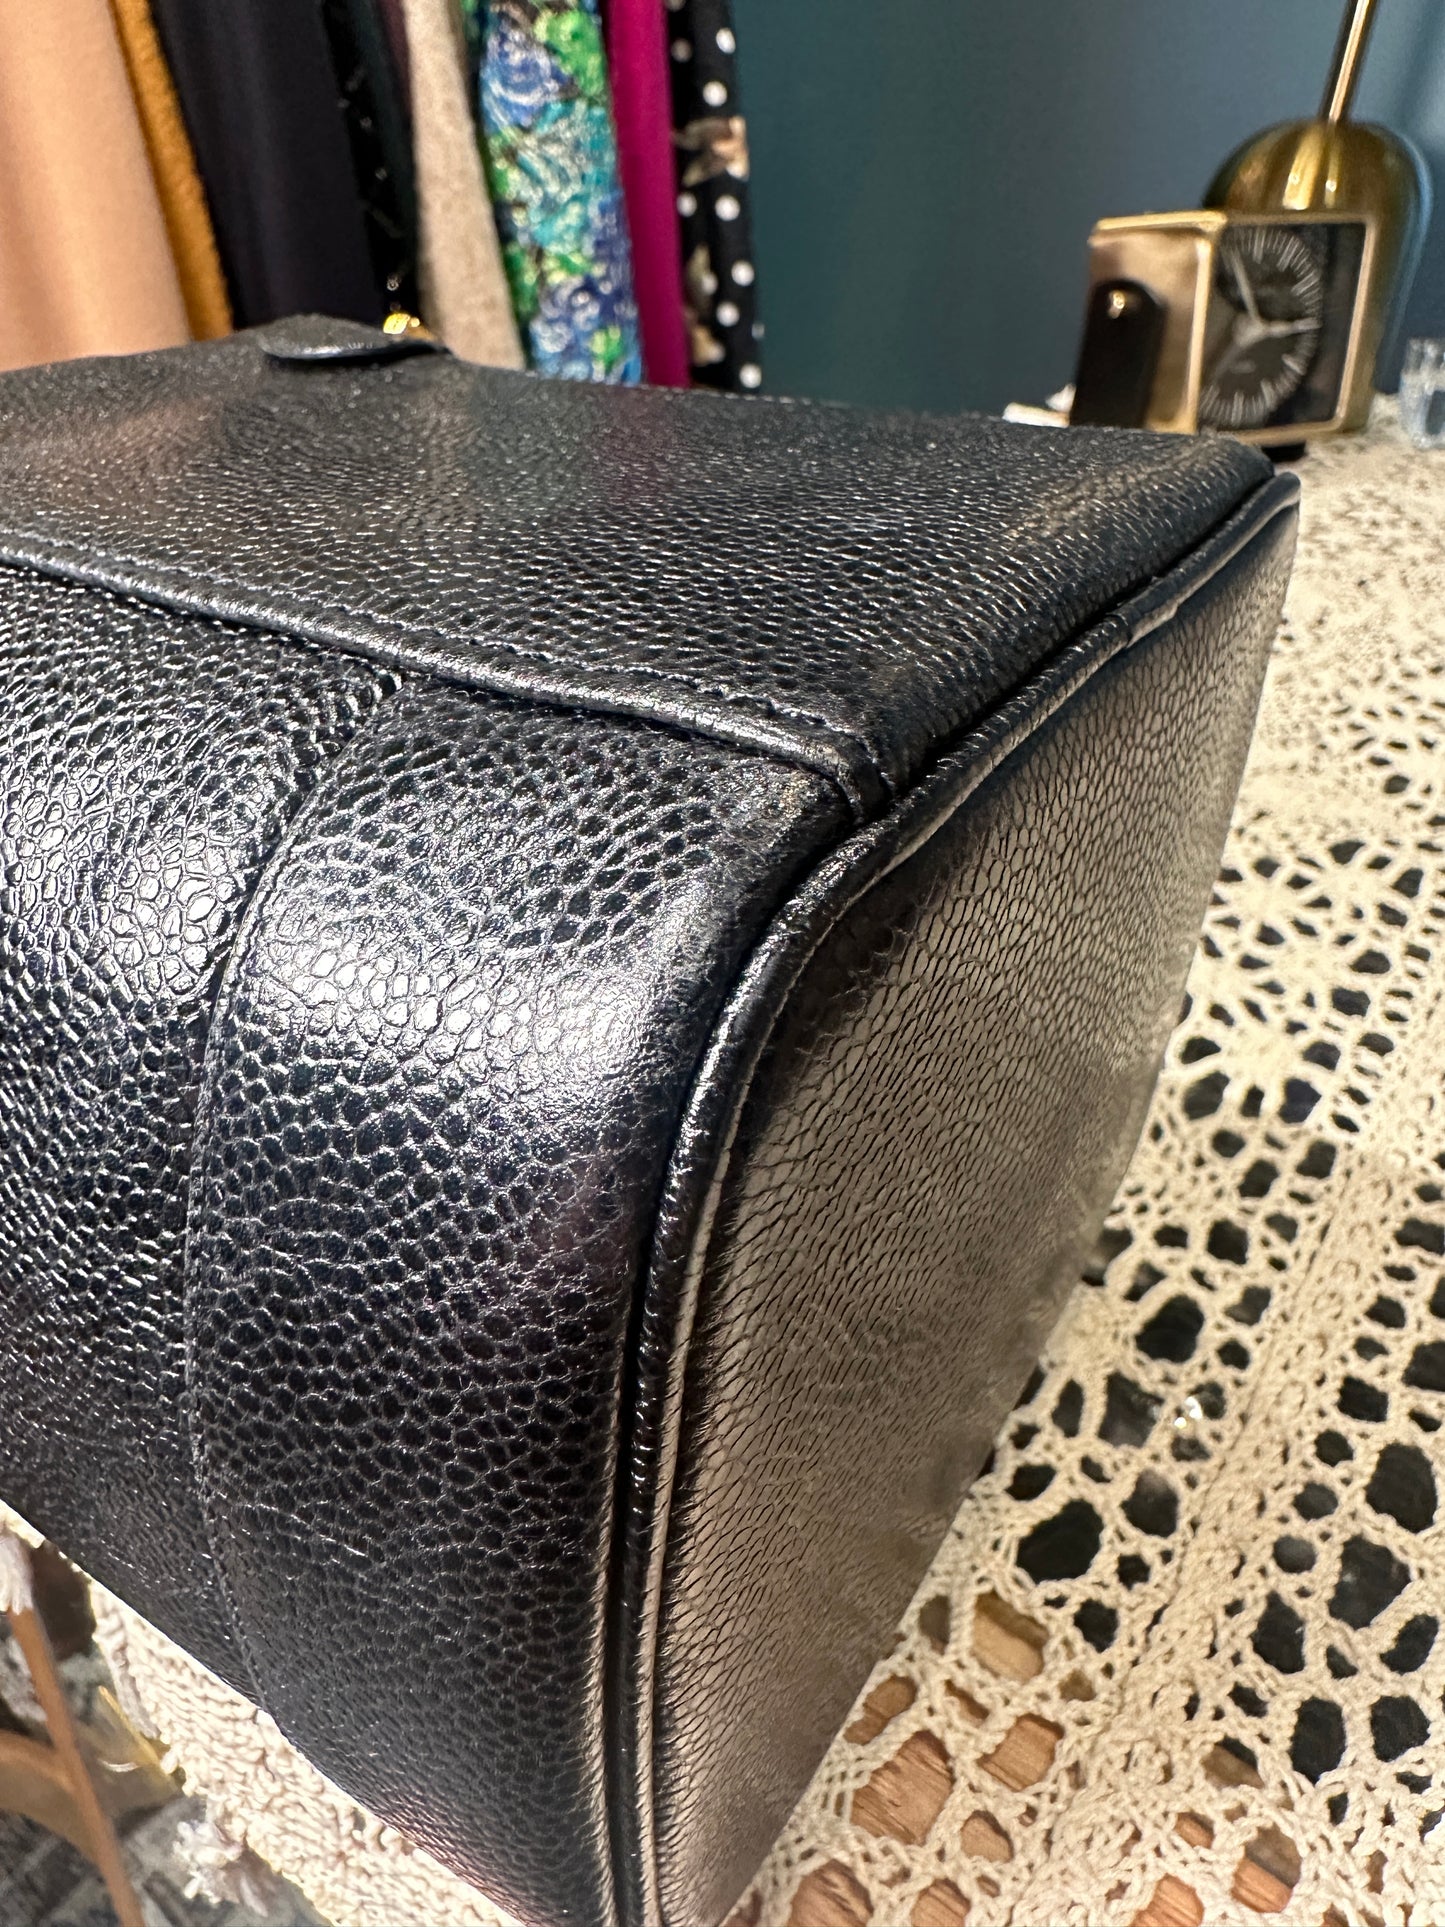 CHANEL VINTAGE 100% Authentic Genuine Leather Makeup Vanity Case Bag, Series 1, Black, 1989-1991, Good Condition